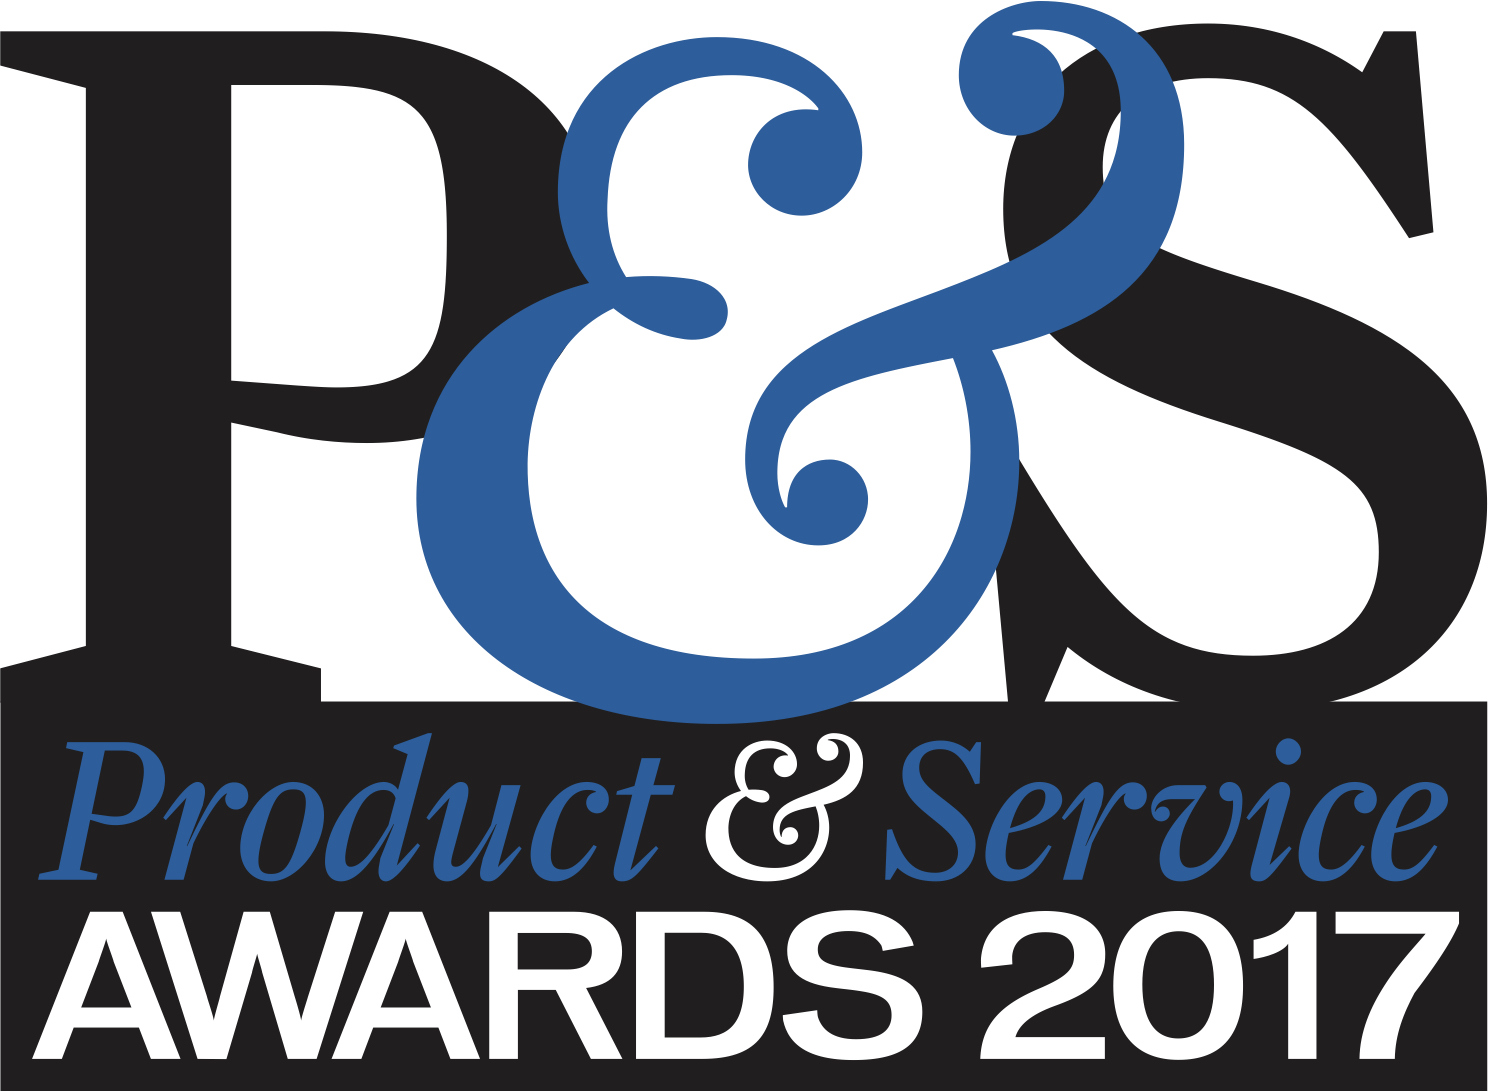 P&S Awards Logo 2017 Blue